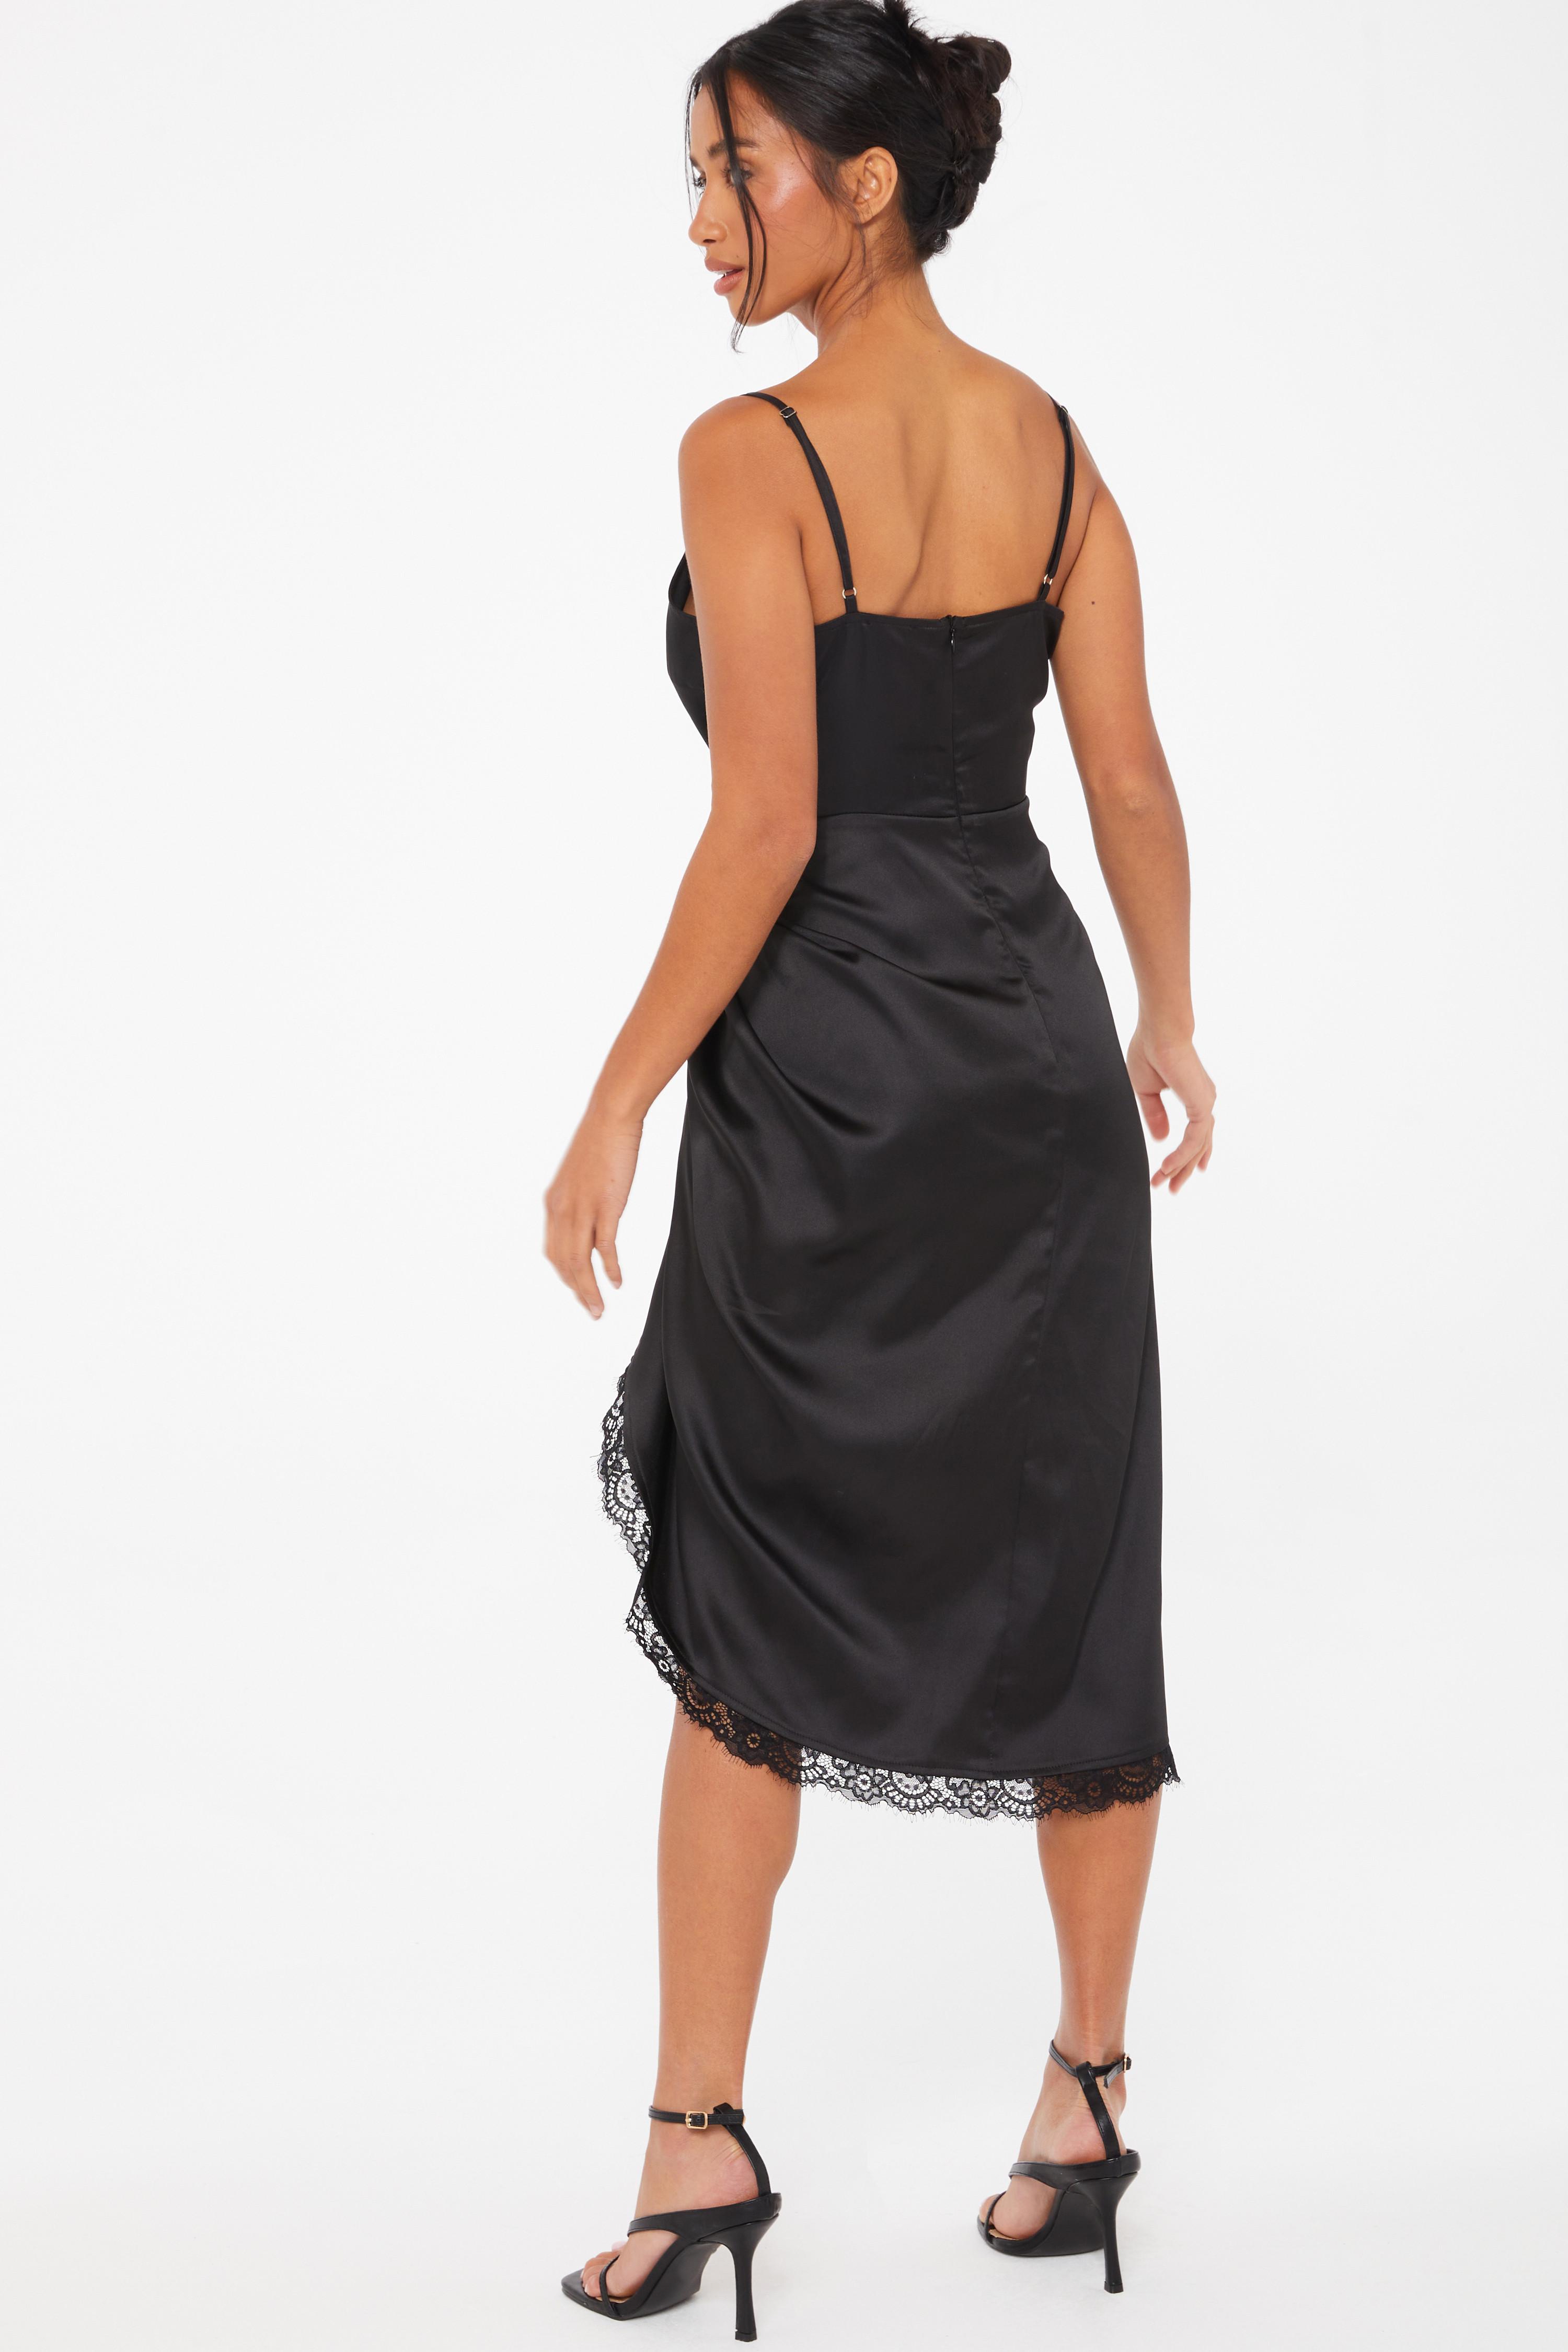 Petite Black Satin Lace Trim Midi Dress<!-- --> - <!-- -->QUIZ